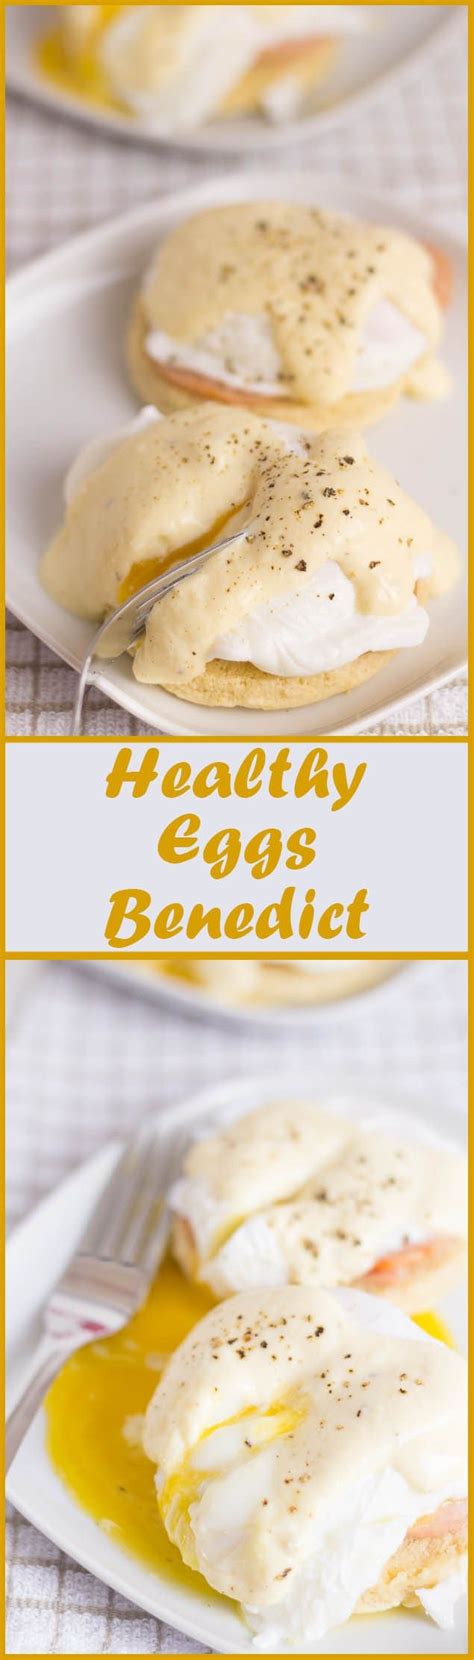 Healthy Eggs Benedict Recipe Brunch Recipes Food